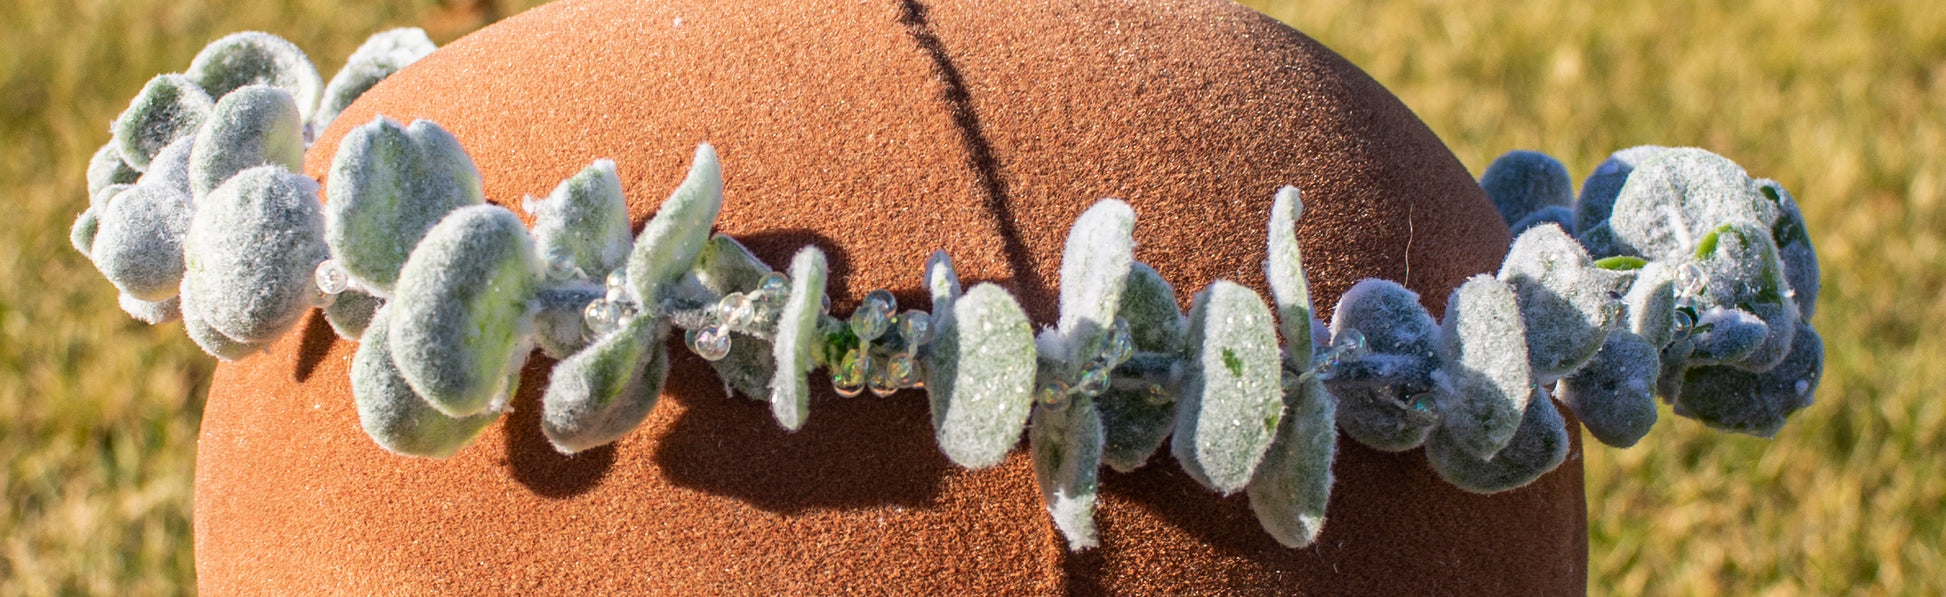 Winter Snowy Eucalyptus Crown close up